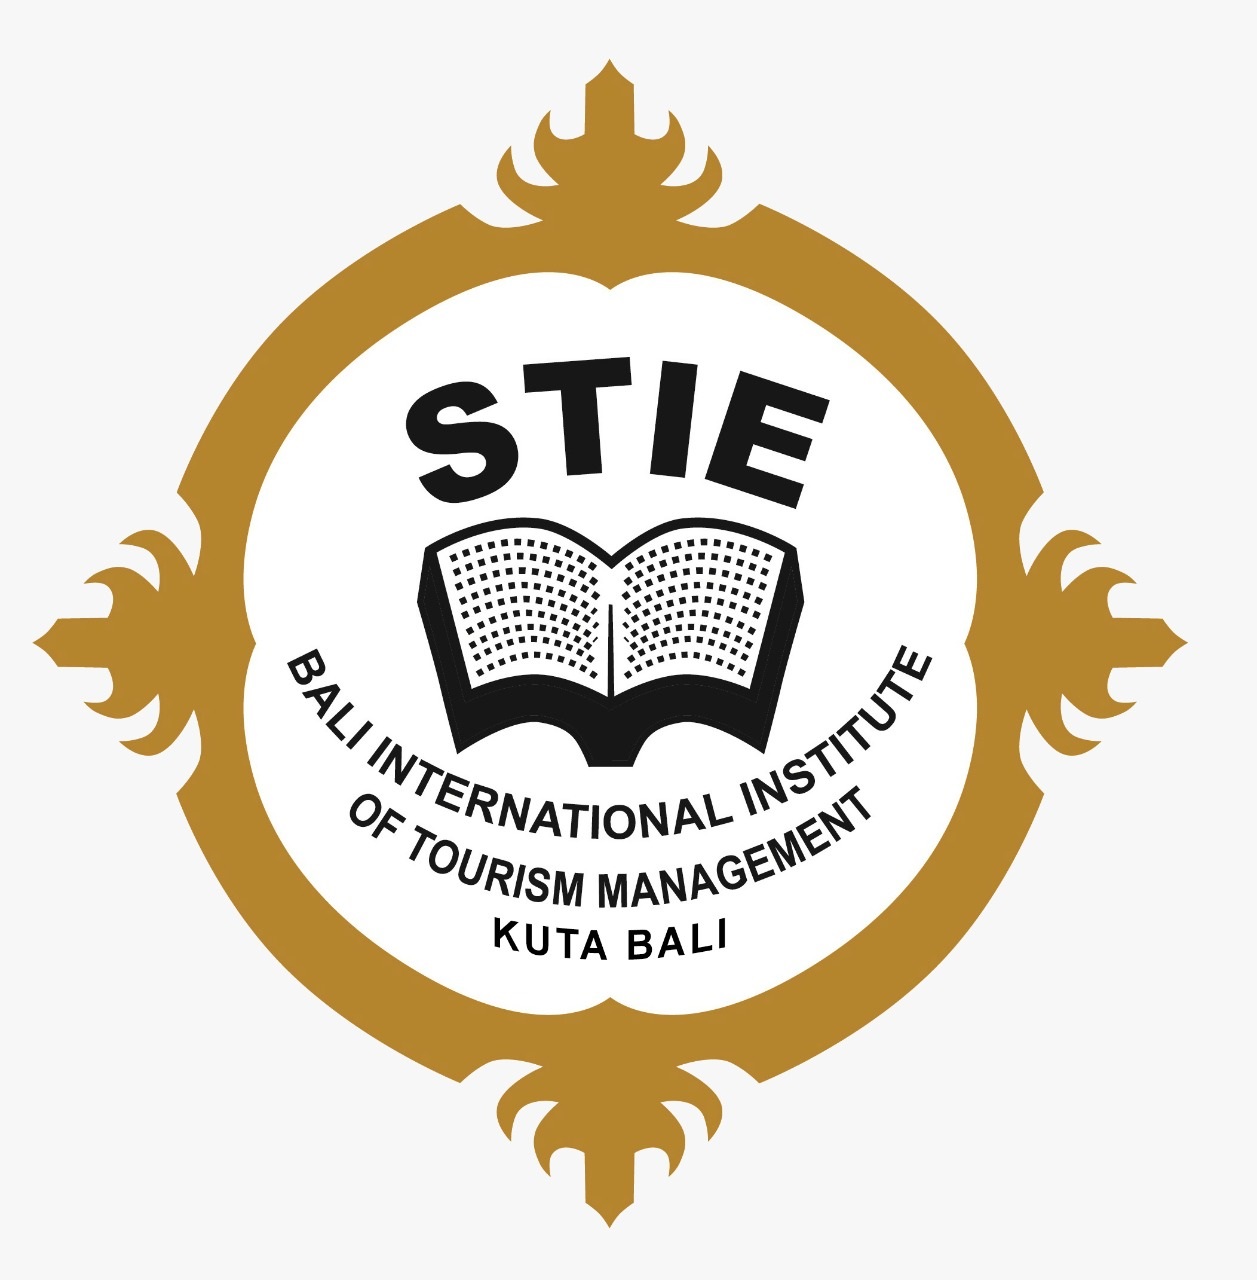 Sekolah Tinggi Ilmu Ekonomi Bali International Institute Of Tourism Management